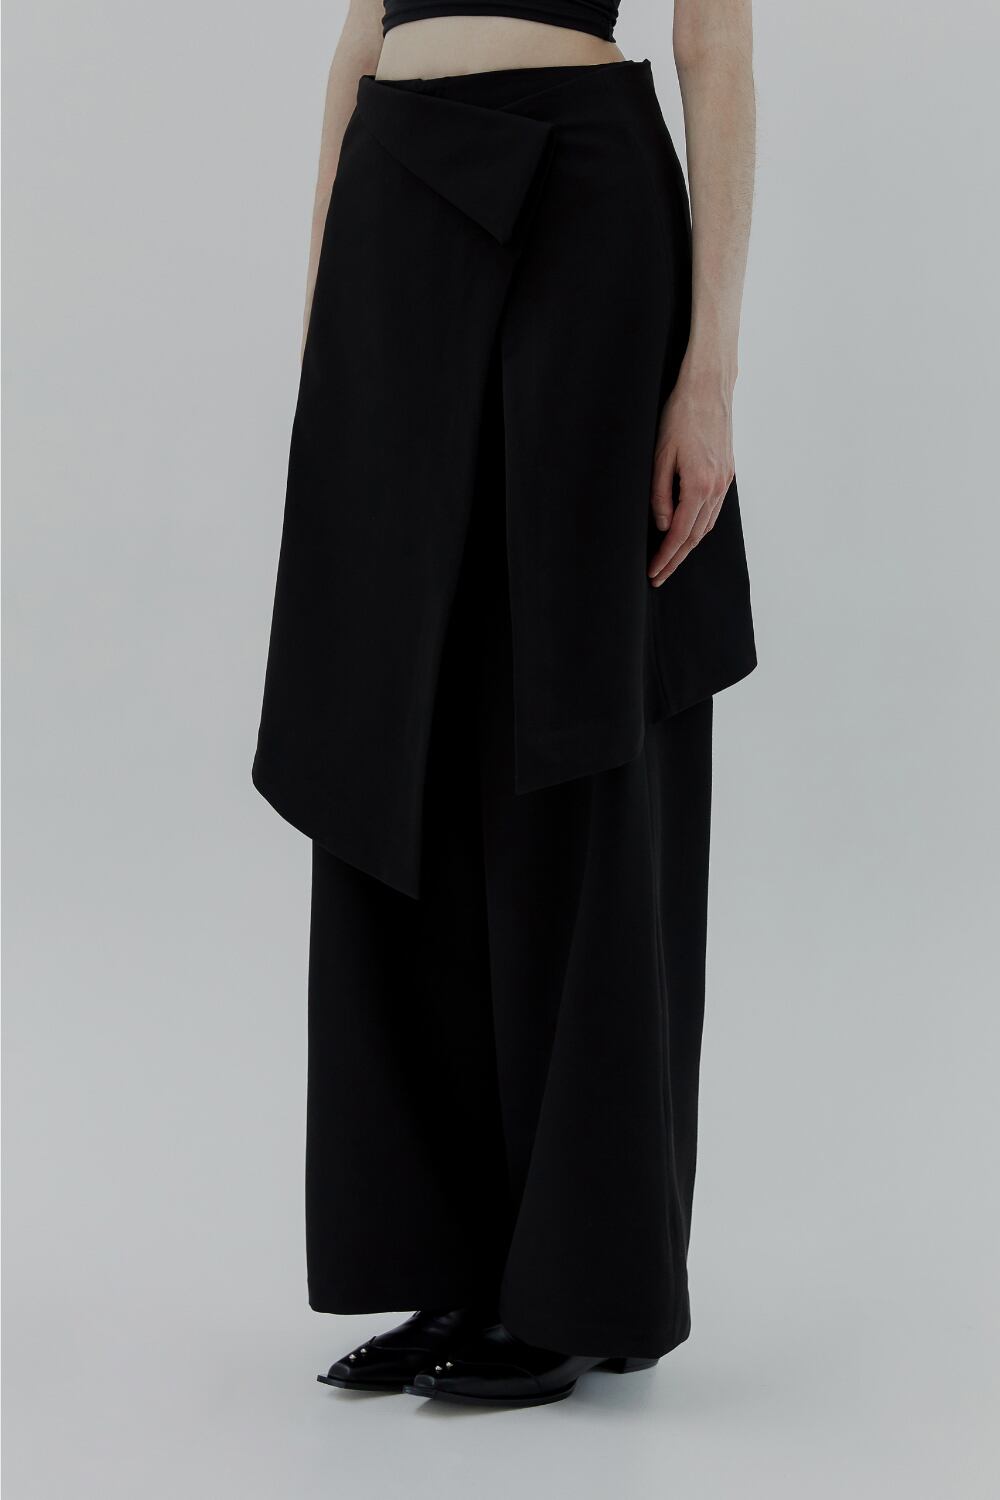 [TREEMINGBIRD] 2-way Folded Wrap Skirt-pants [ Black ] 正規品 韓国ブランド 韓国通販 韓国代行  韓国ファッション TRMNGBD | BONZ (韓国ブランド 代行) powered by BASE